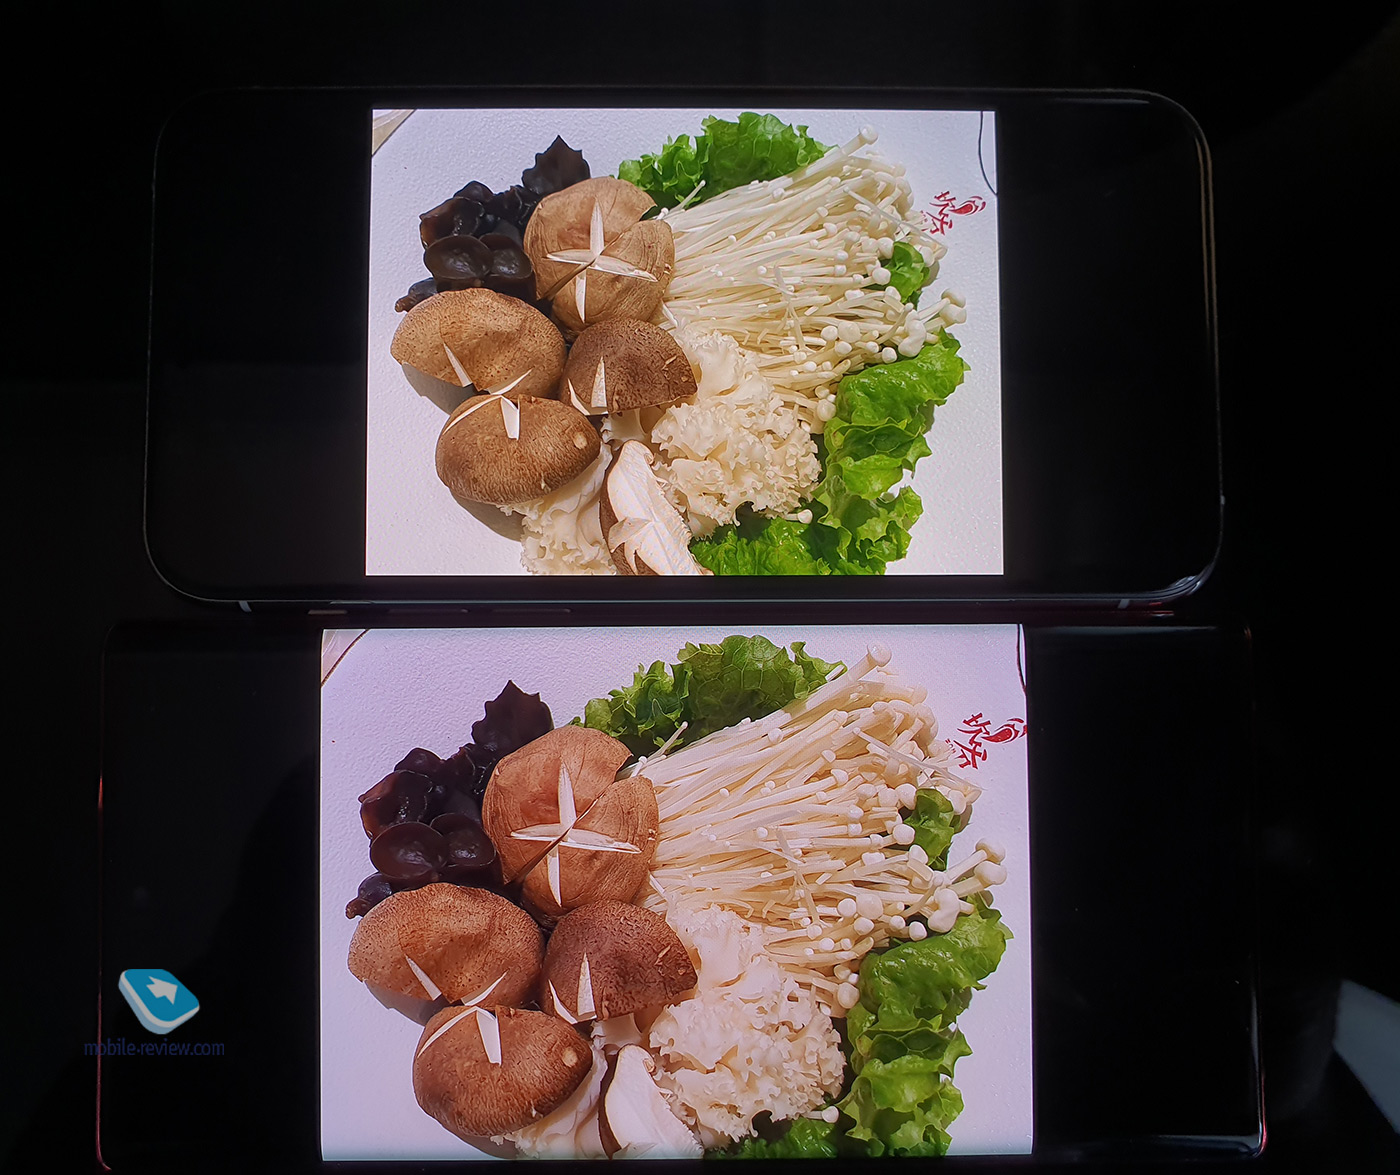 Сравниваем камеры на iPhone 11 Pro/Pro Max и Galaxy Note10/10+ - кто лучше?